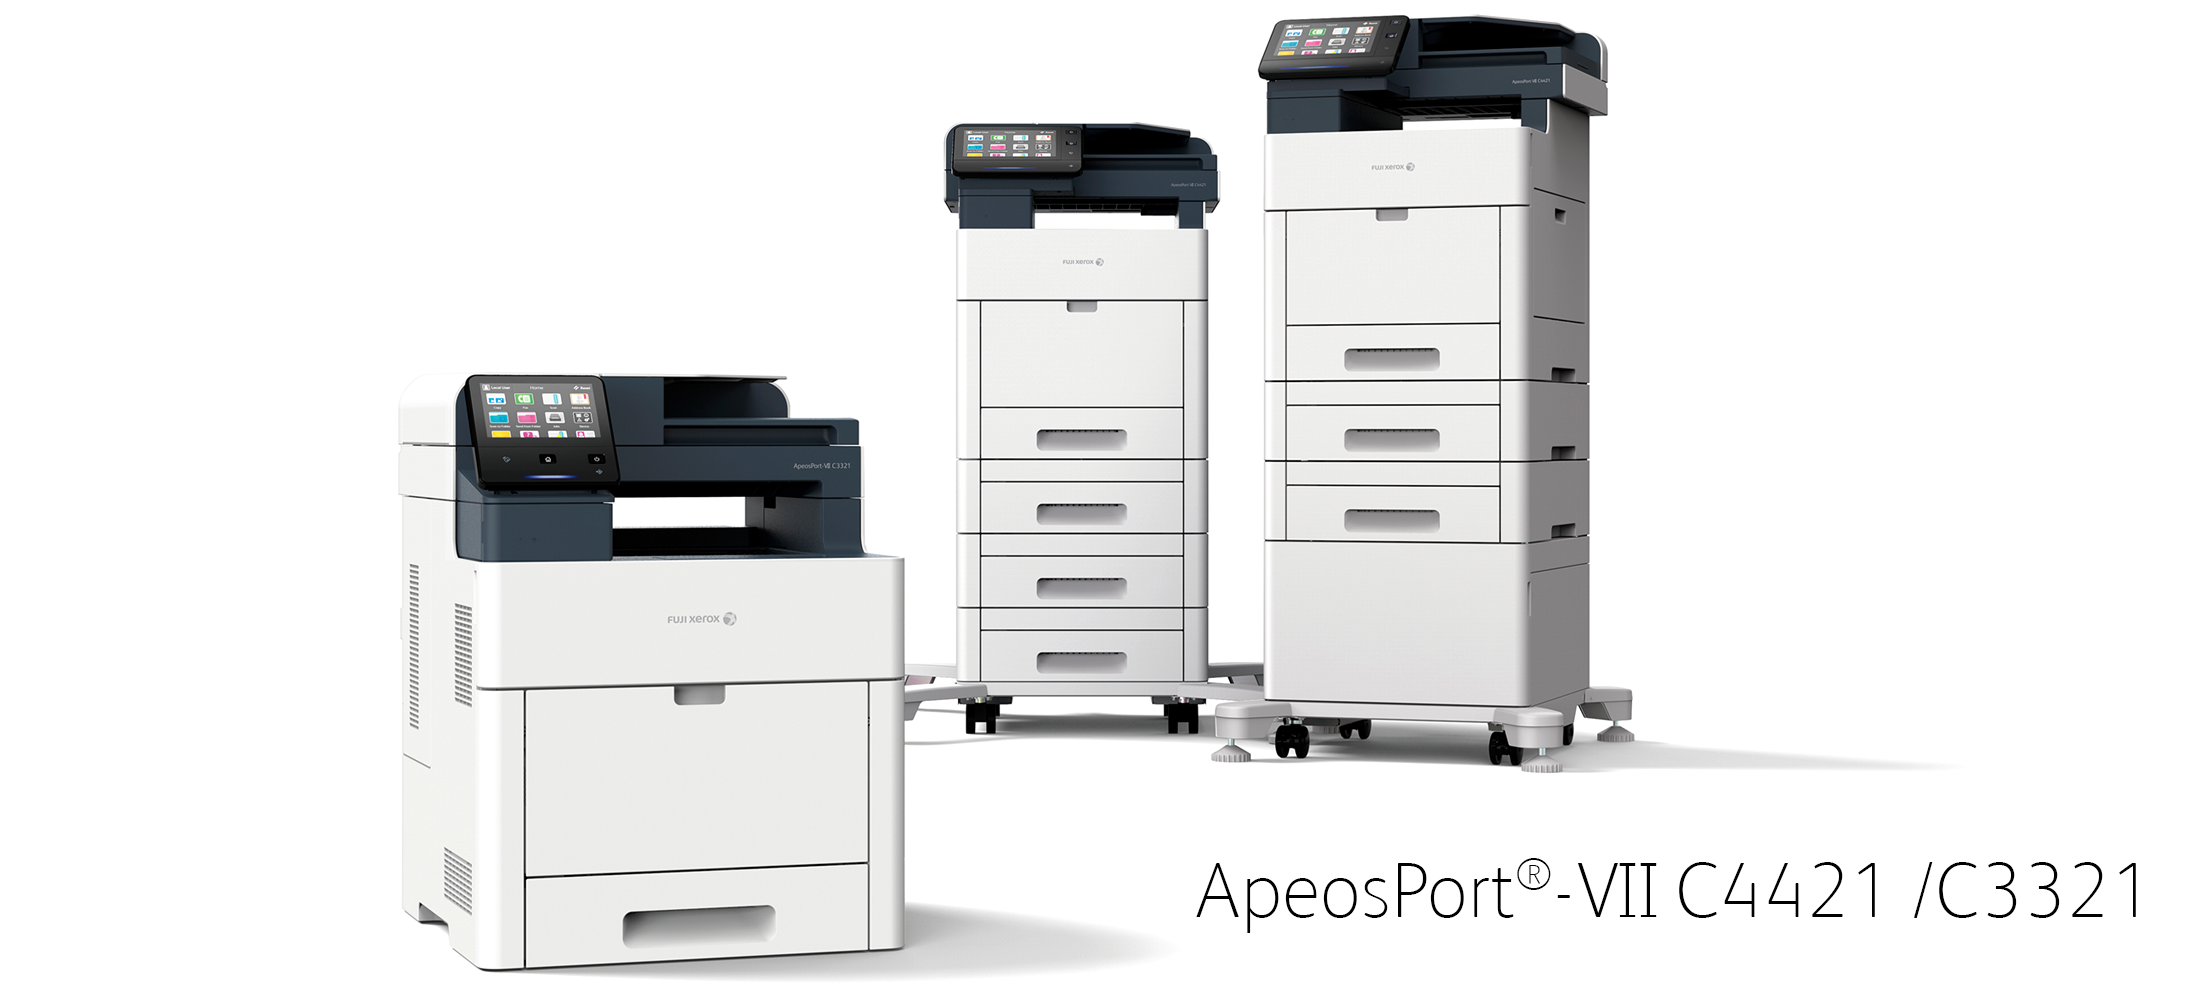 multifunction printers